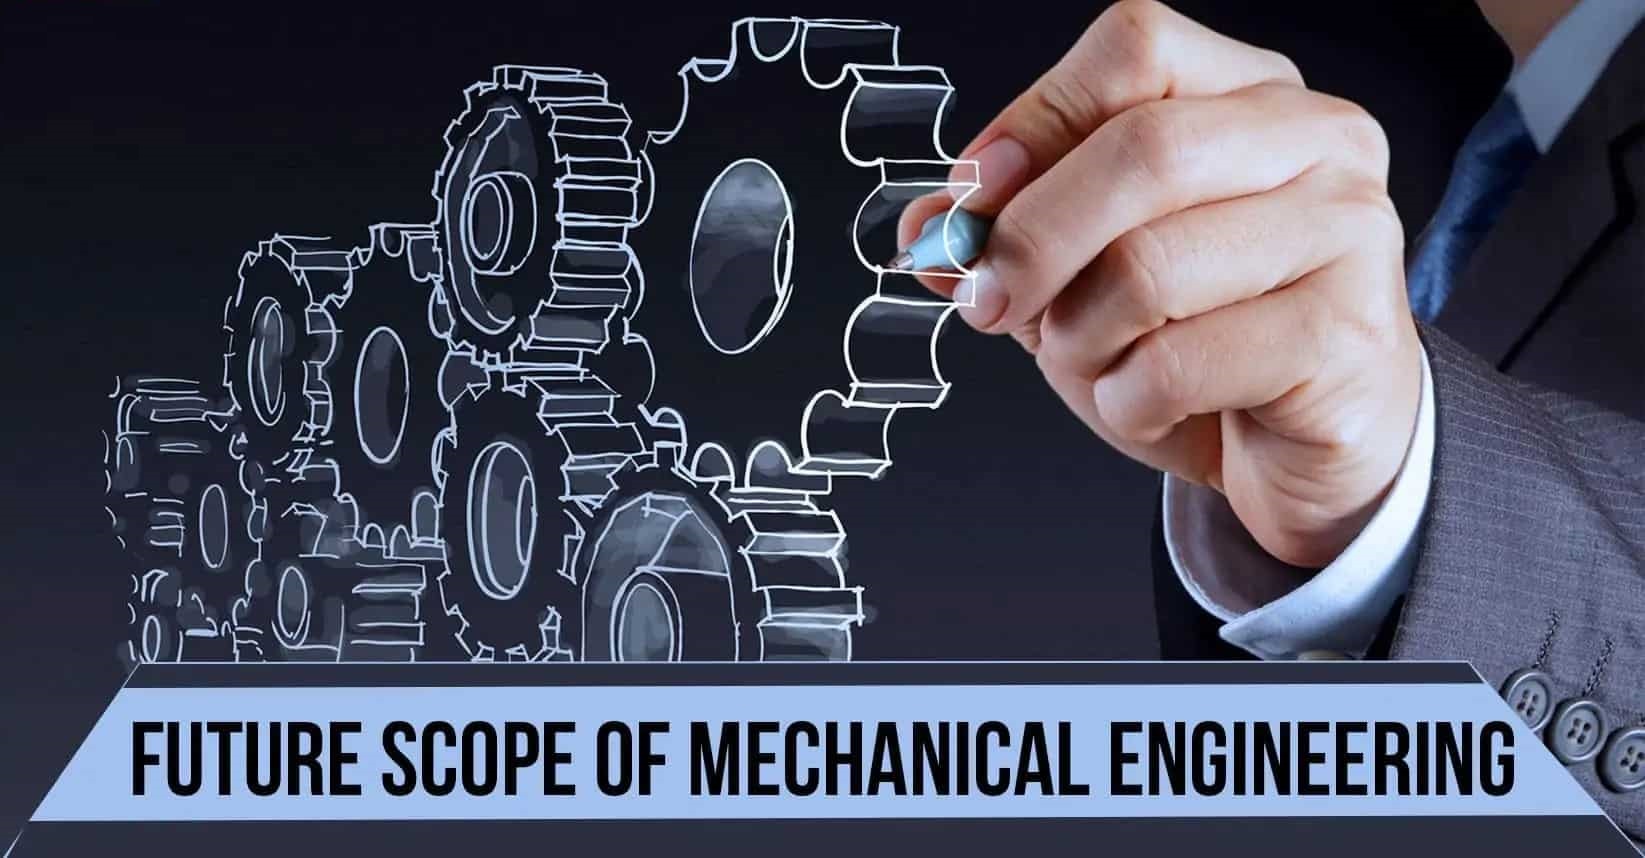 Mechanical Engineering Designing the Future